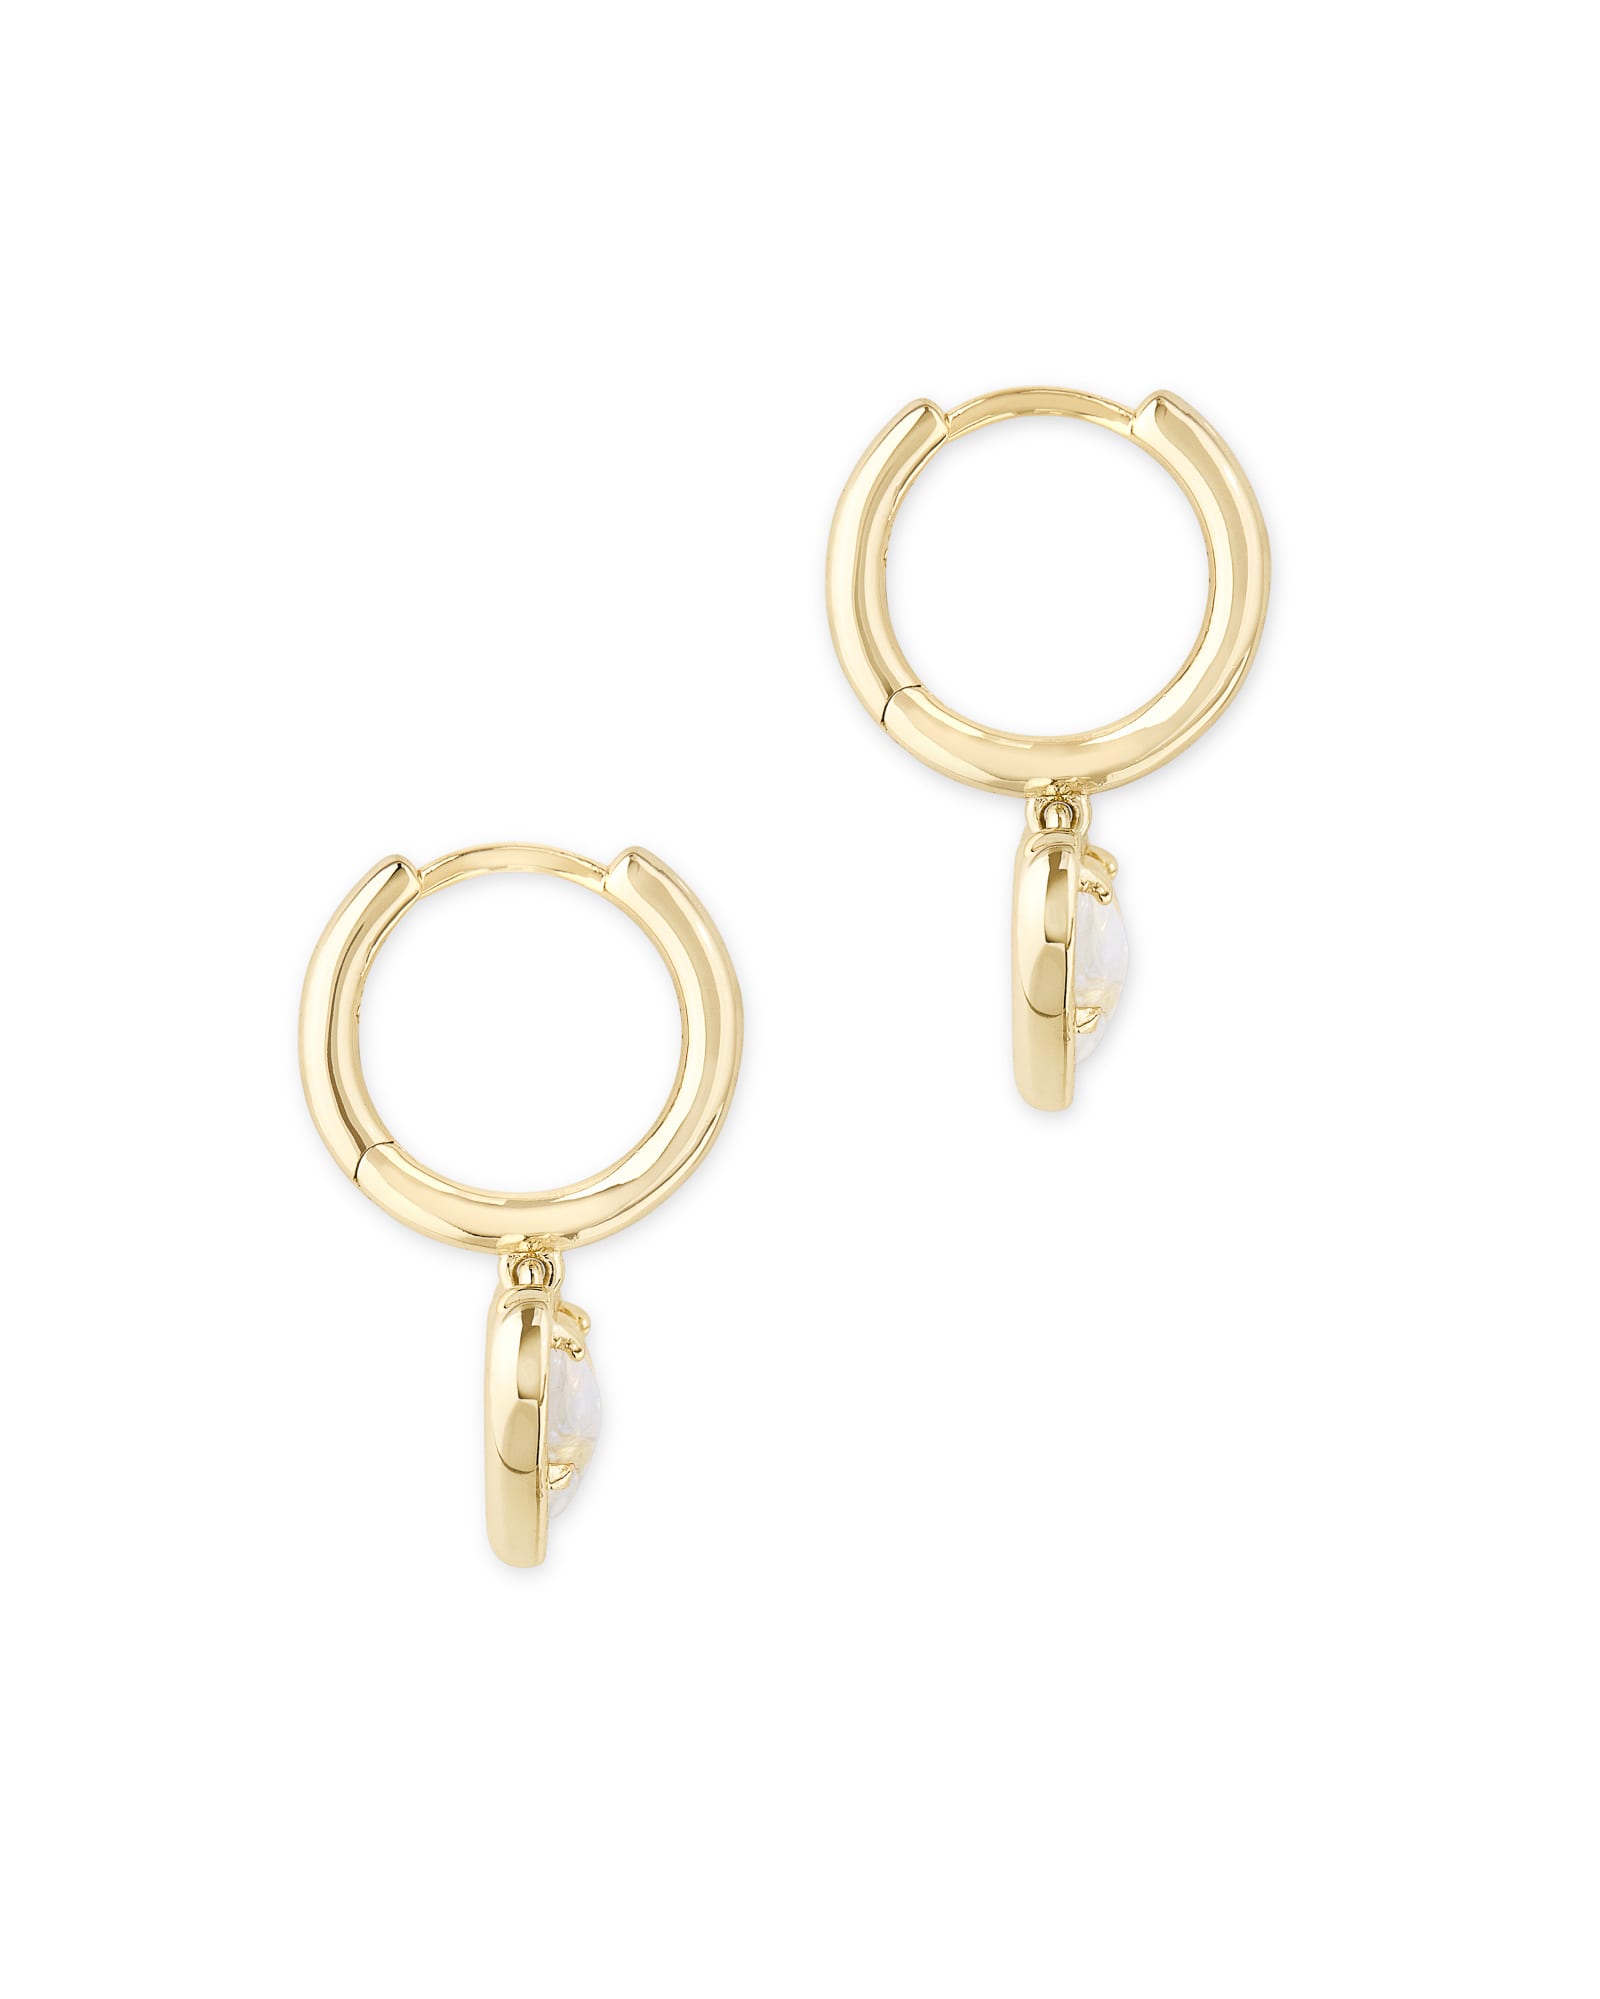 Shy 14k Yellow Gold Double Huggie Earrings With 40 Diamonds, Orin Jewelers